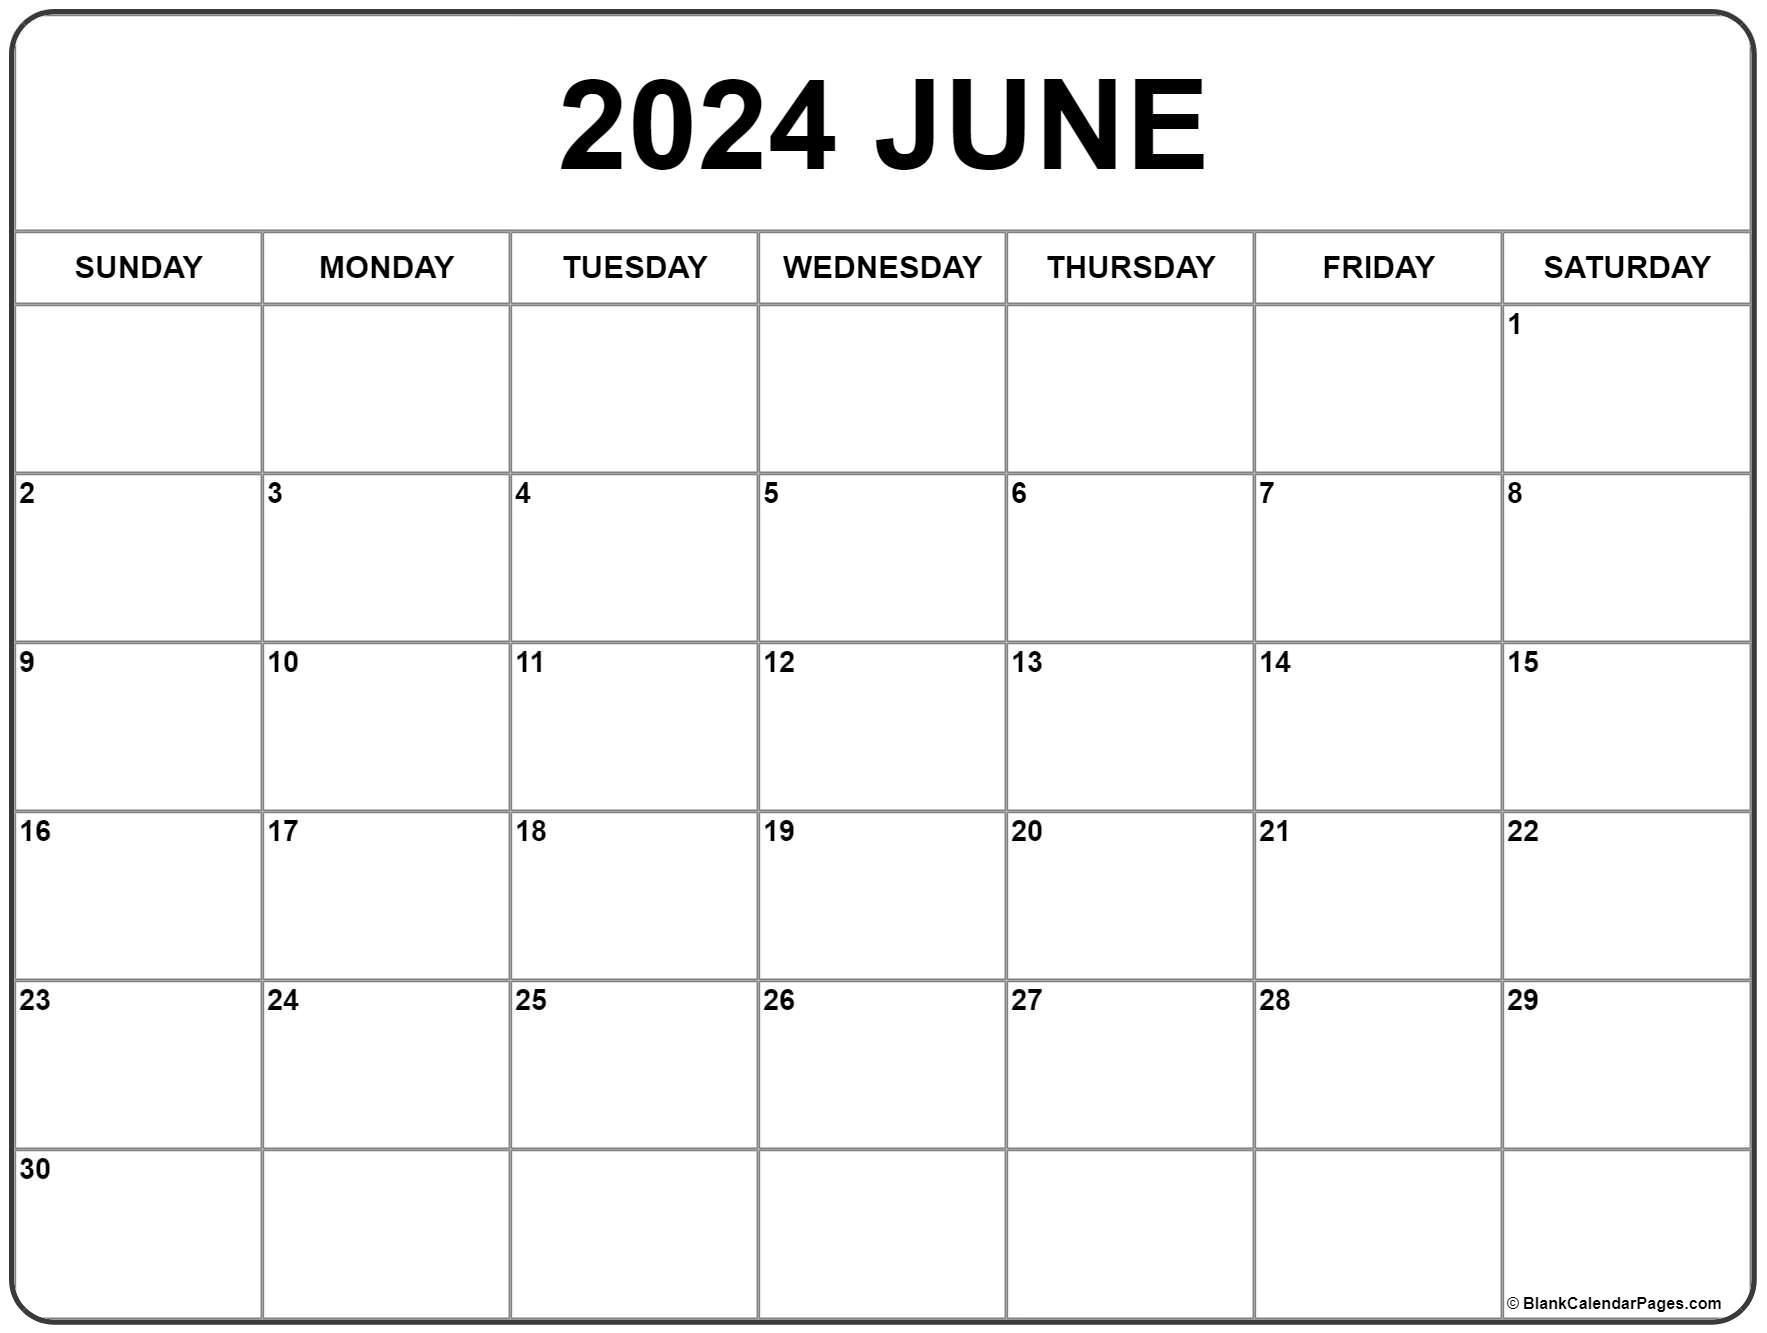 Blank July 2021 Calendar June 2021 calendar | free printable monthly calendars